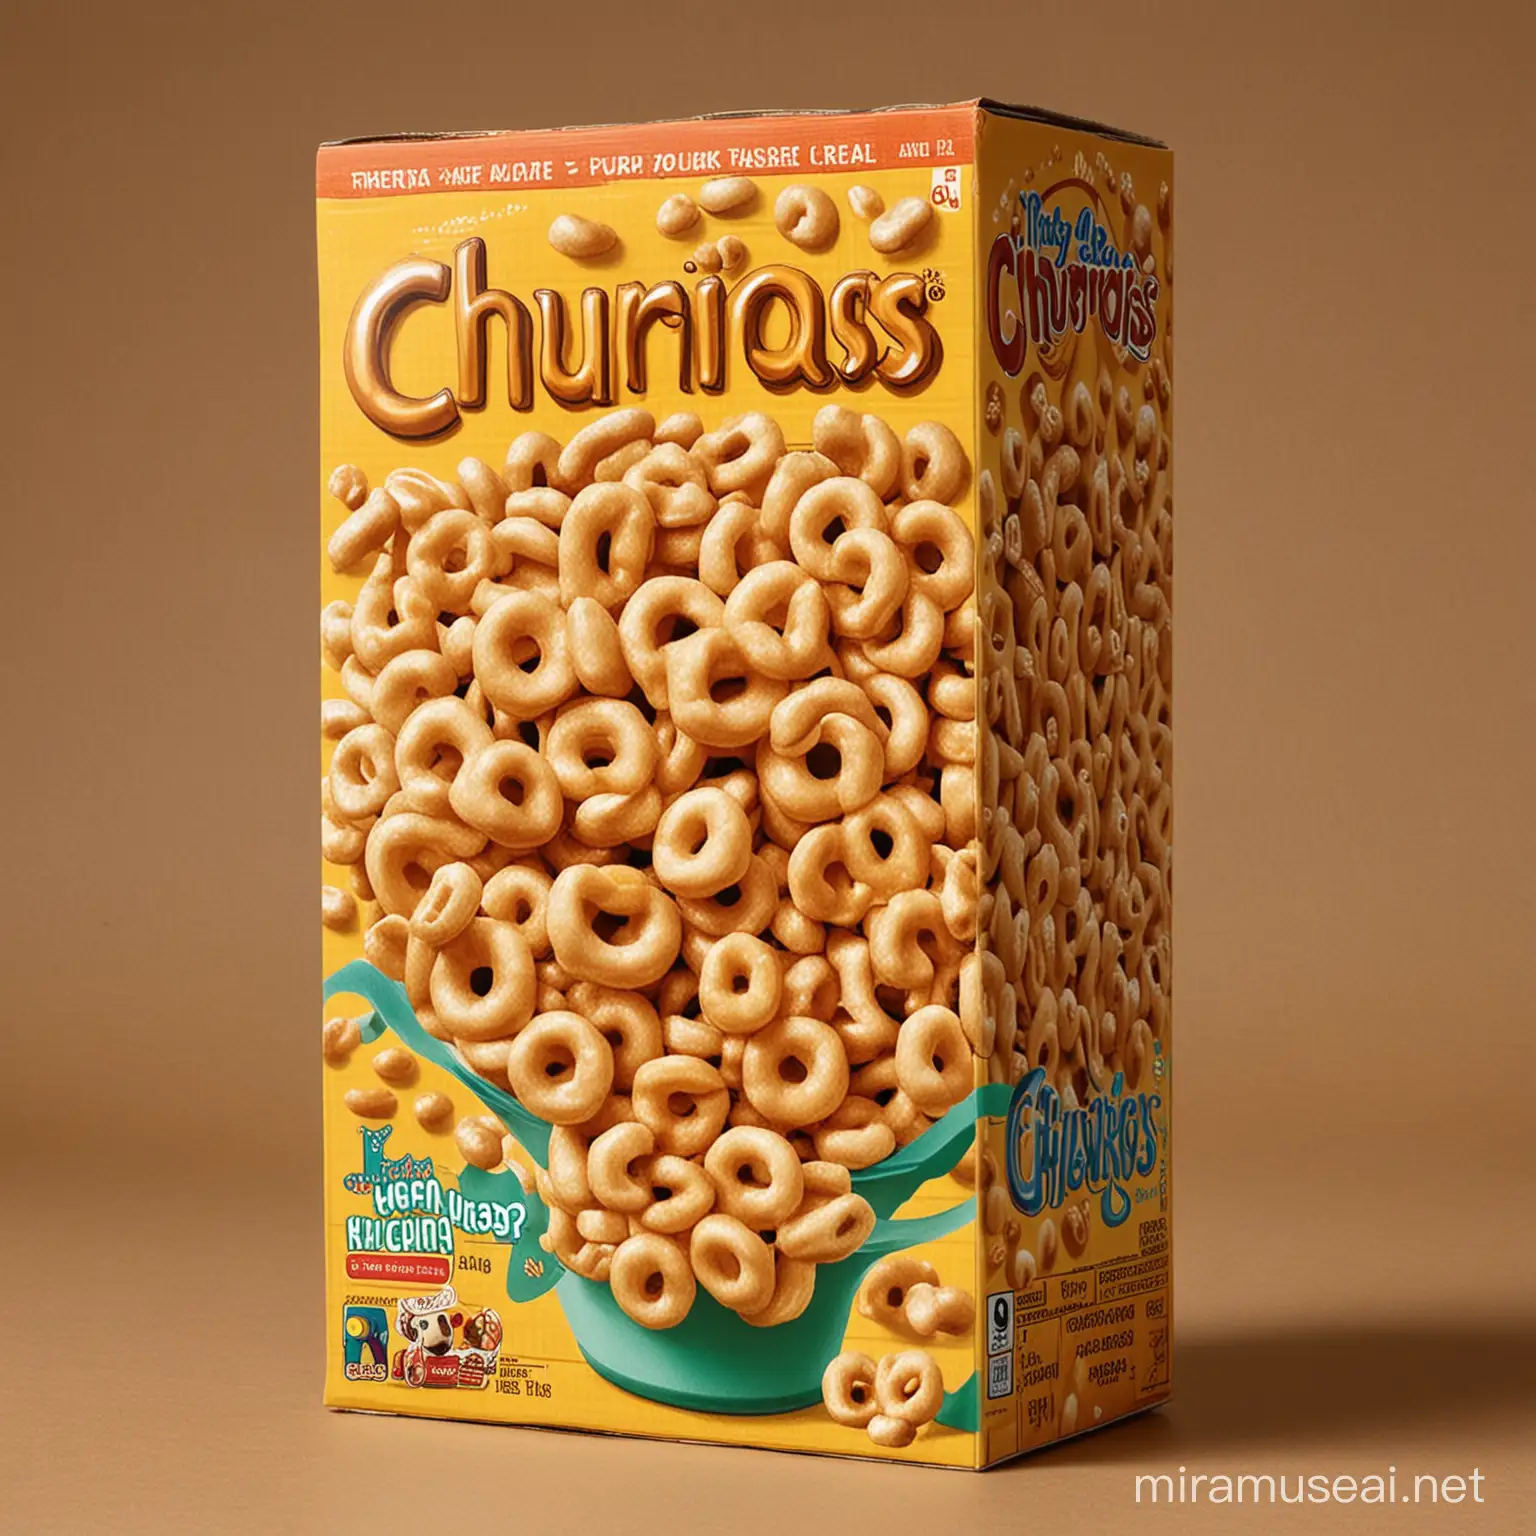 Churrios Cereal Box Playful Twist on Cheerios Packaging